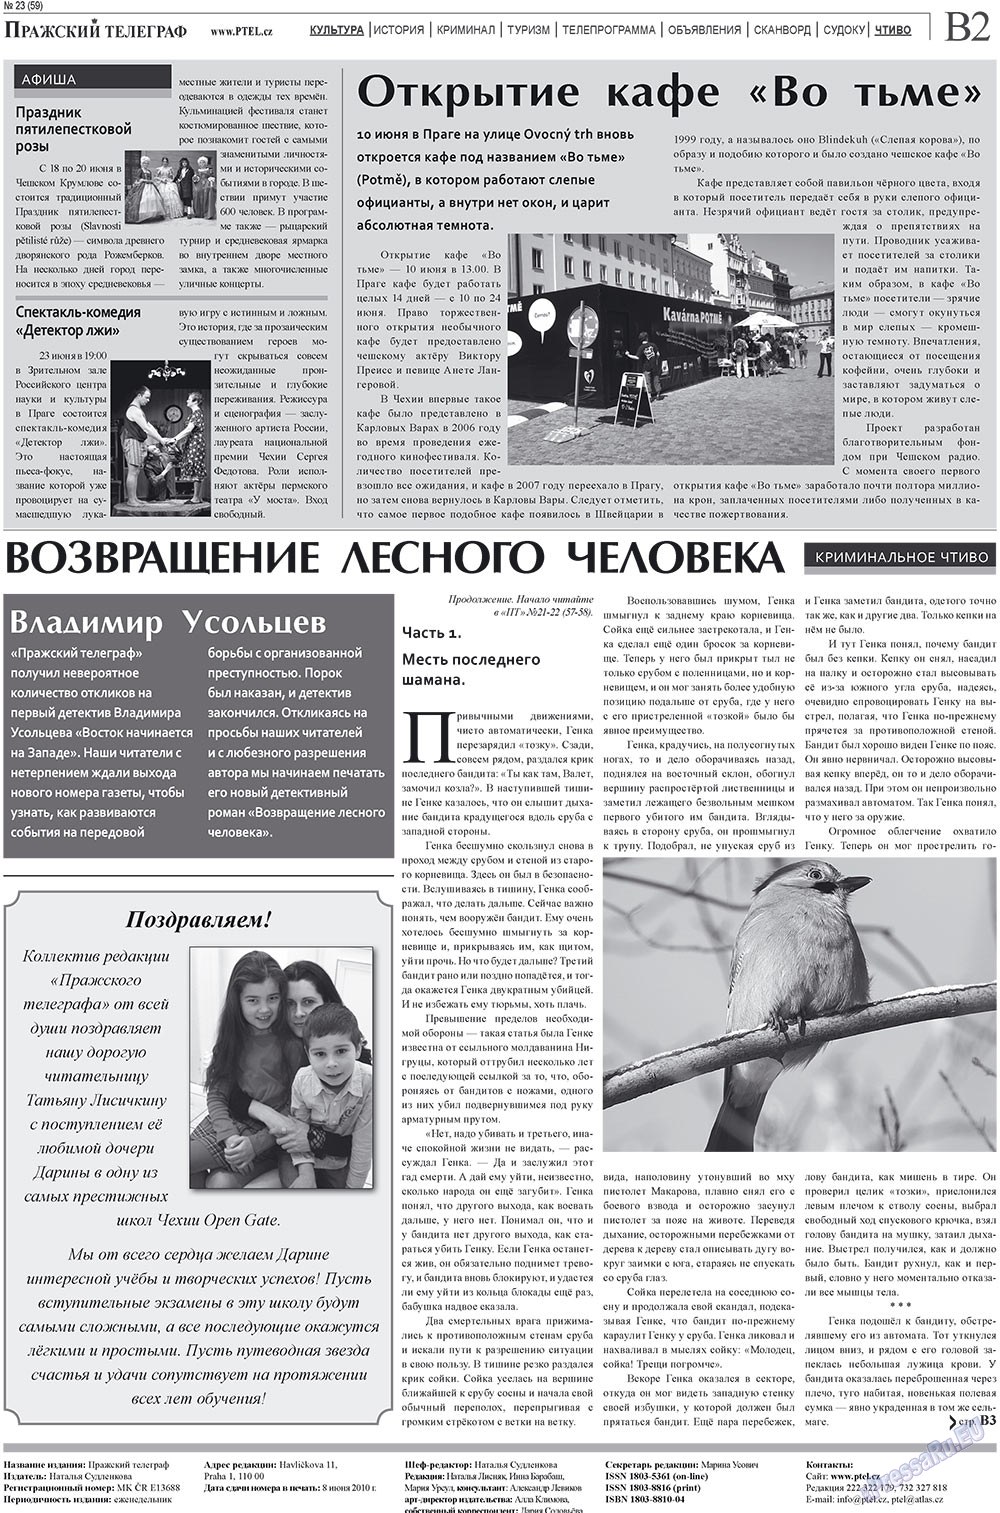 Пражский телеграф, газета. 2010 №23 стр.10